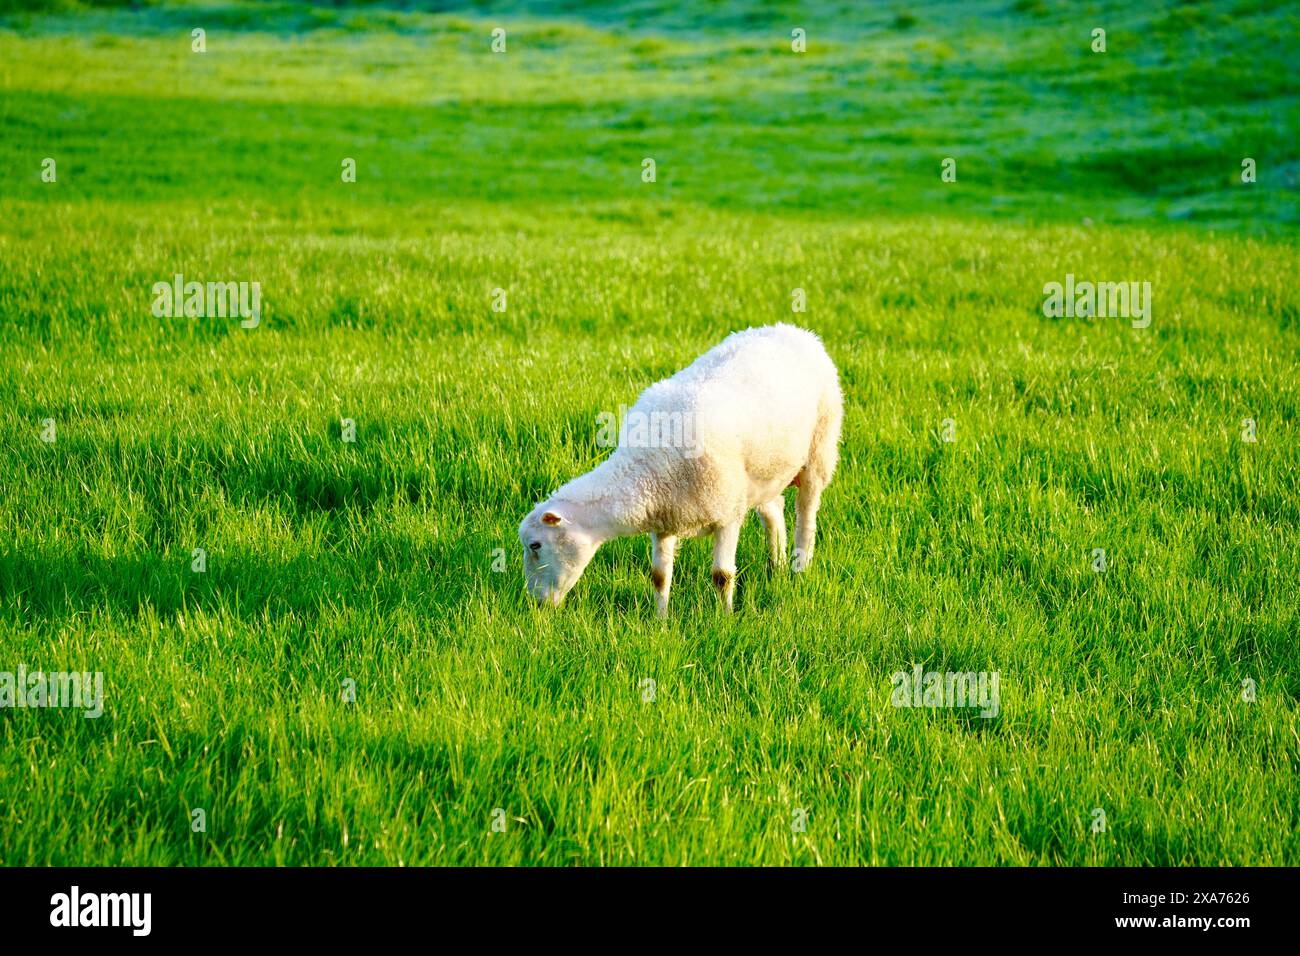 A white sheep grazing in lush green field near Bud, Norway village. Stock Photo